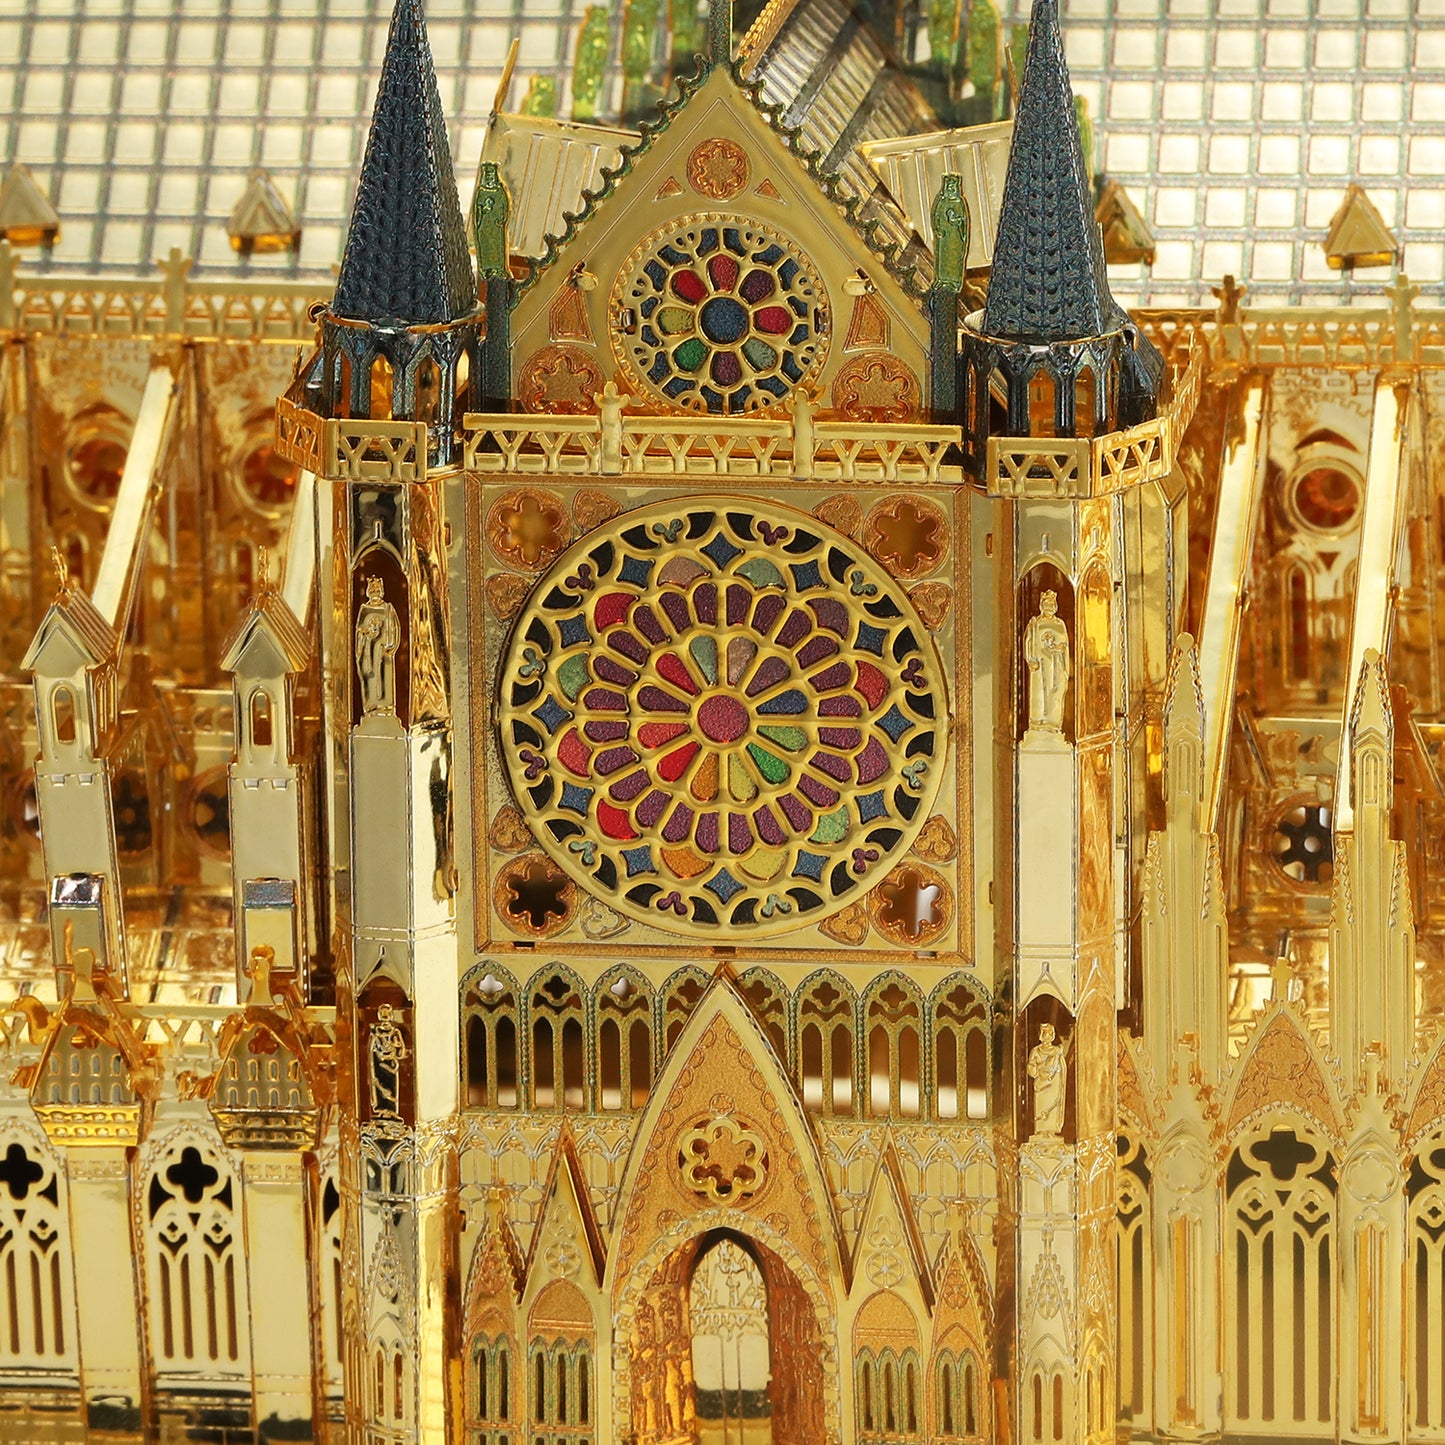 Notre Dame d'oro